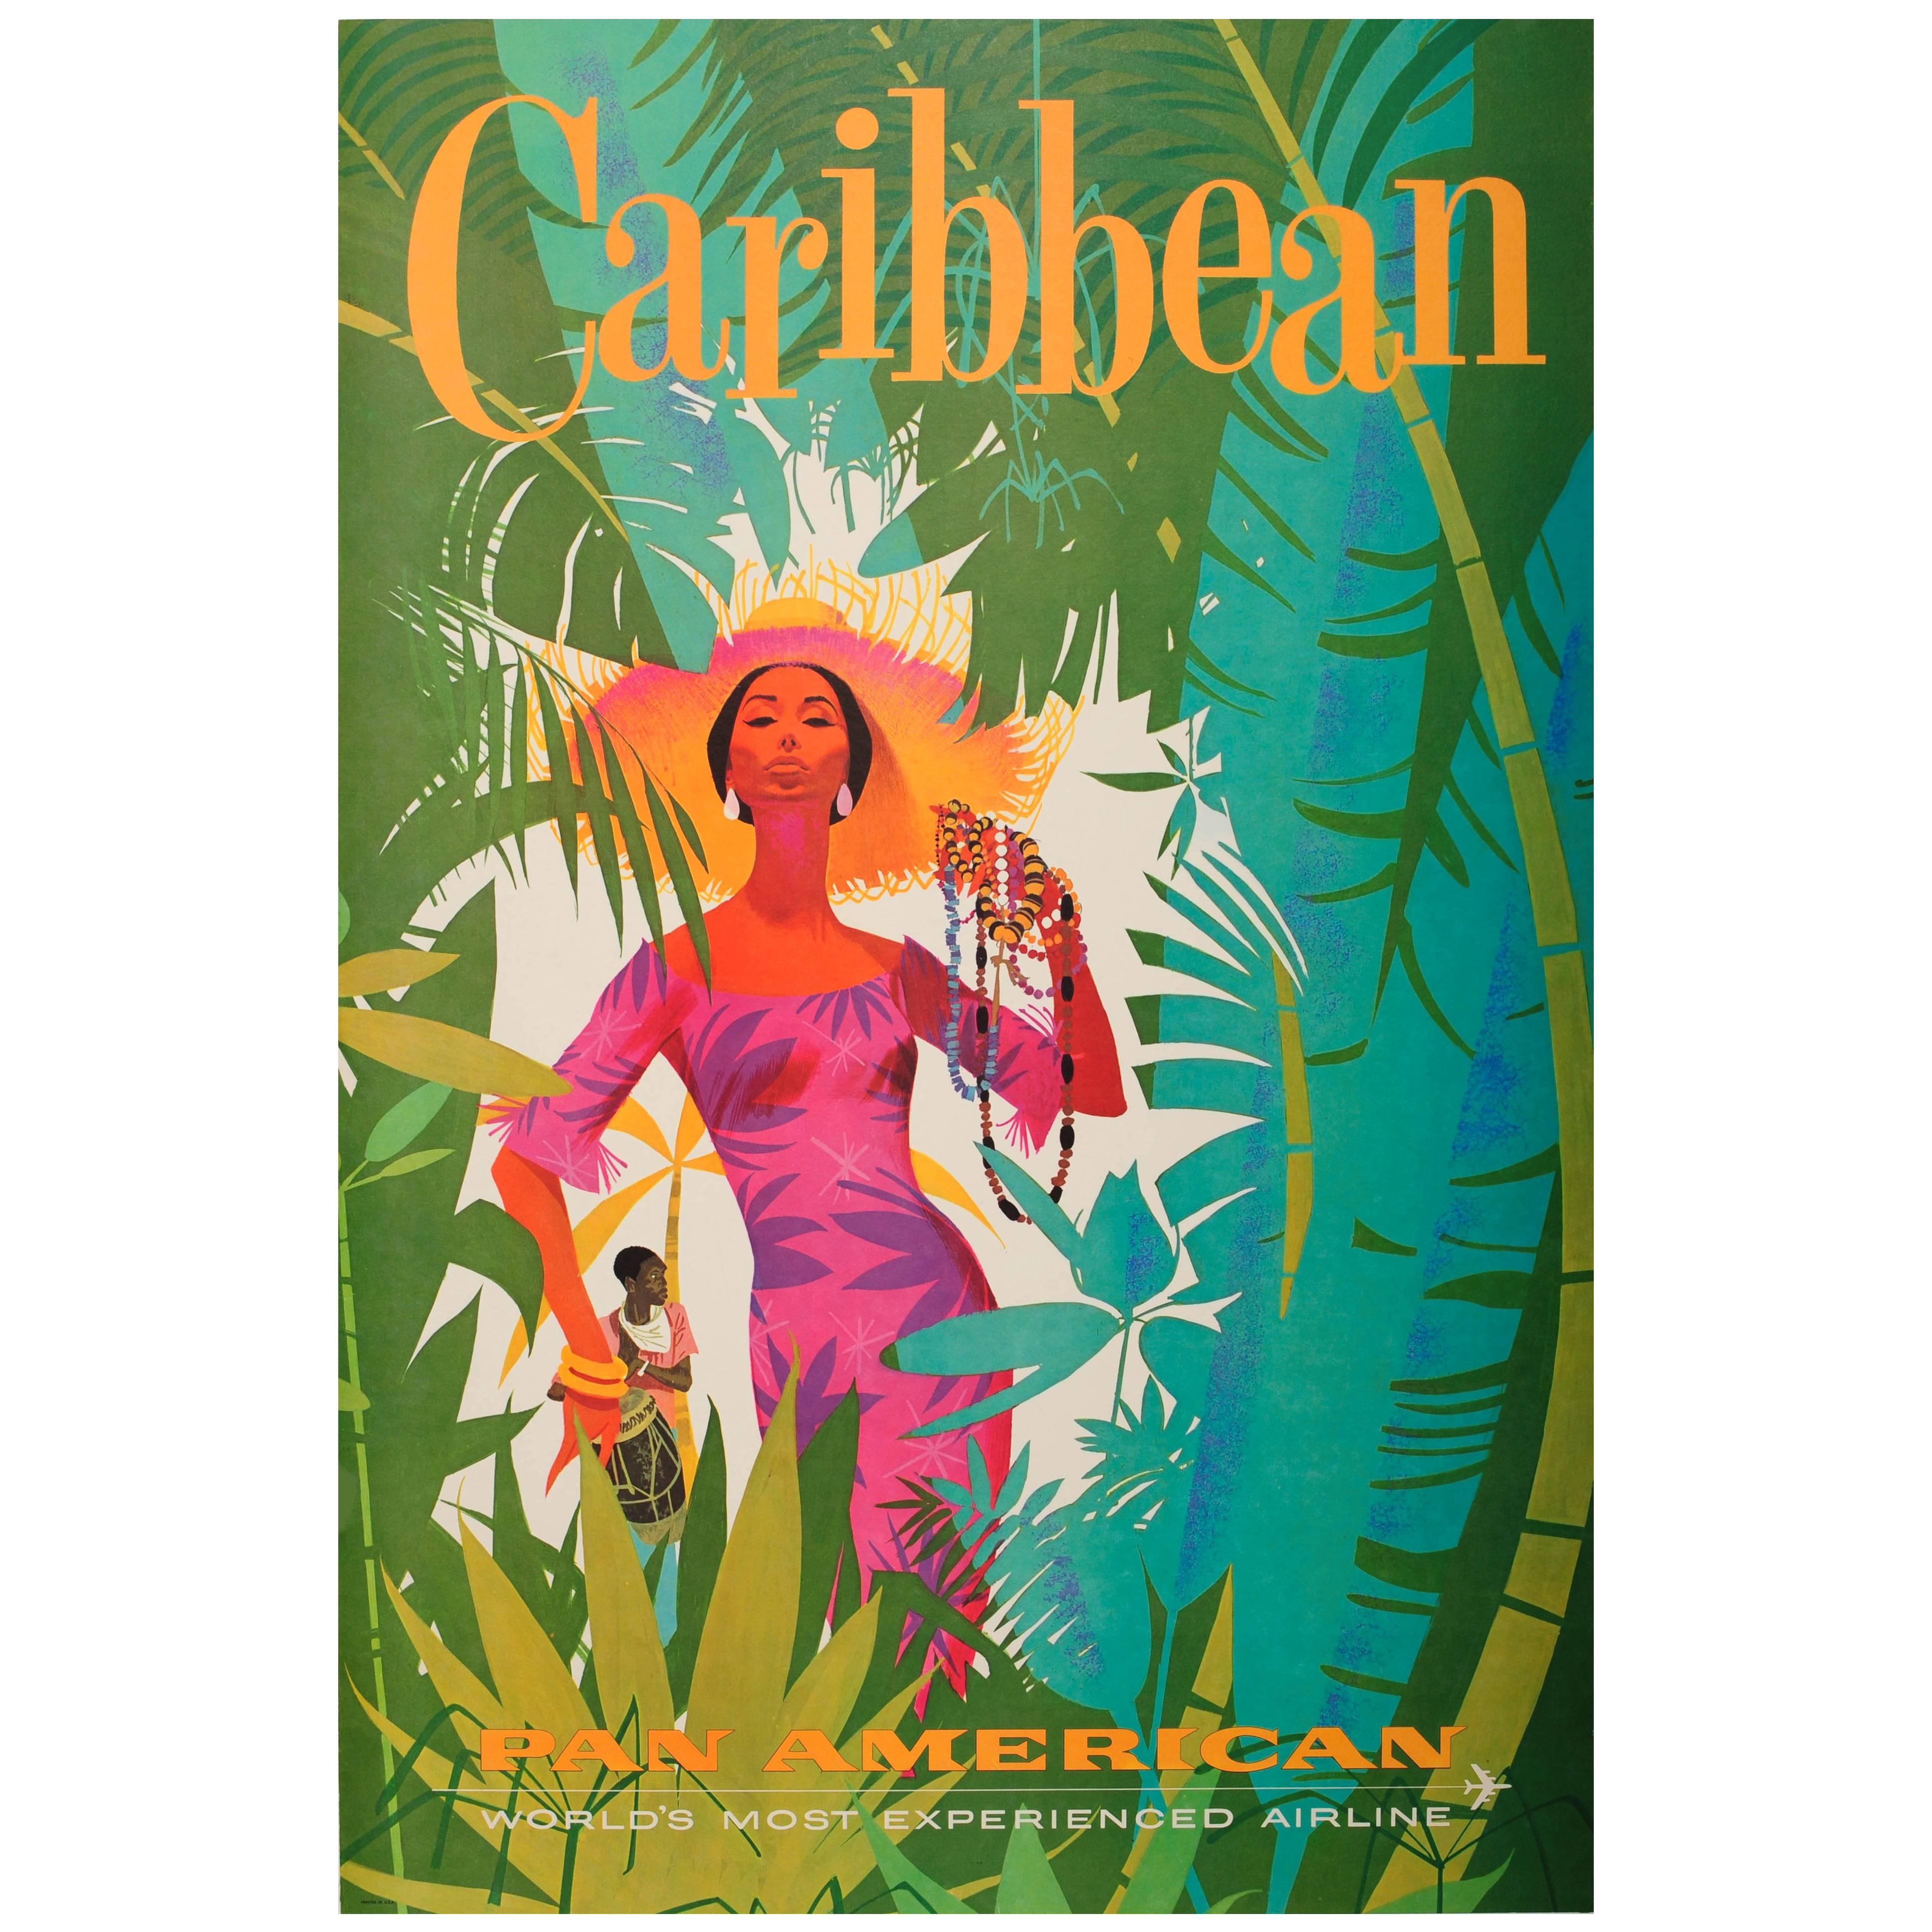 Original Vintage Pan American Travel Poster Advertising Pan Am The Caribbean